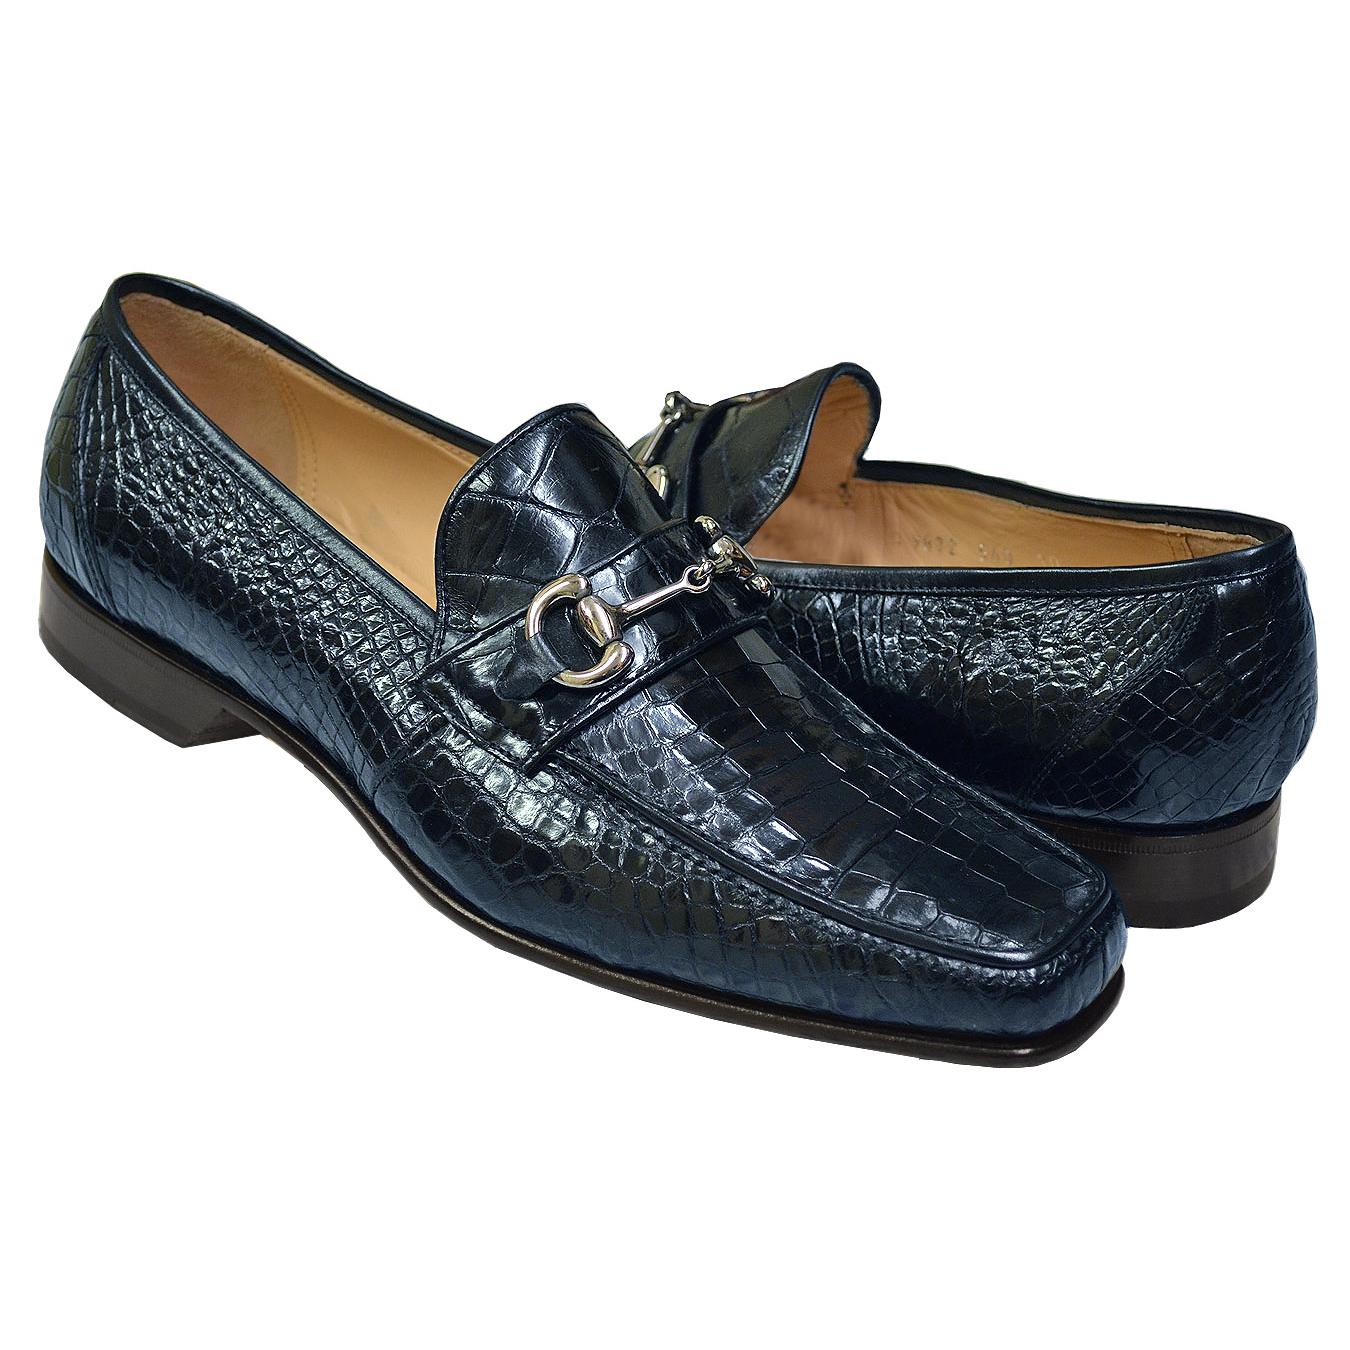 caporicci alligator shoes